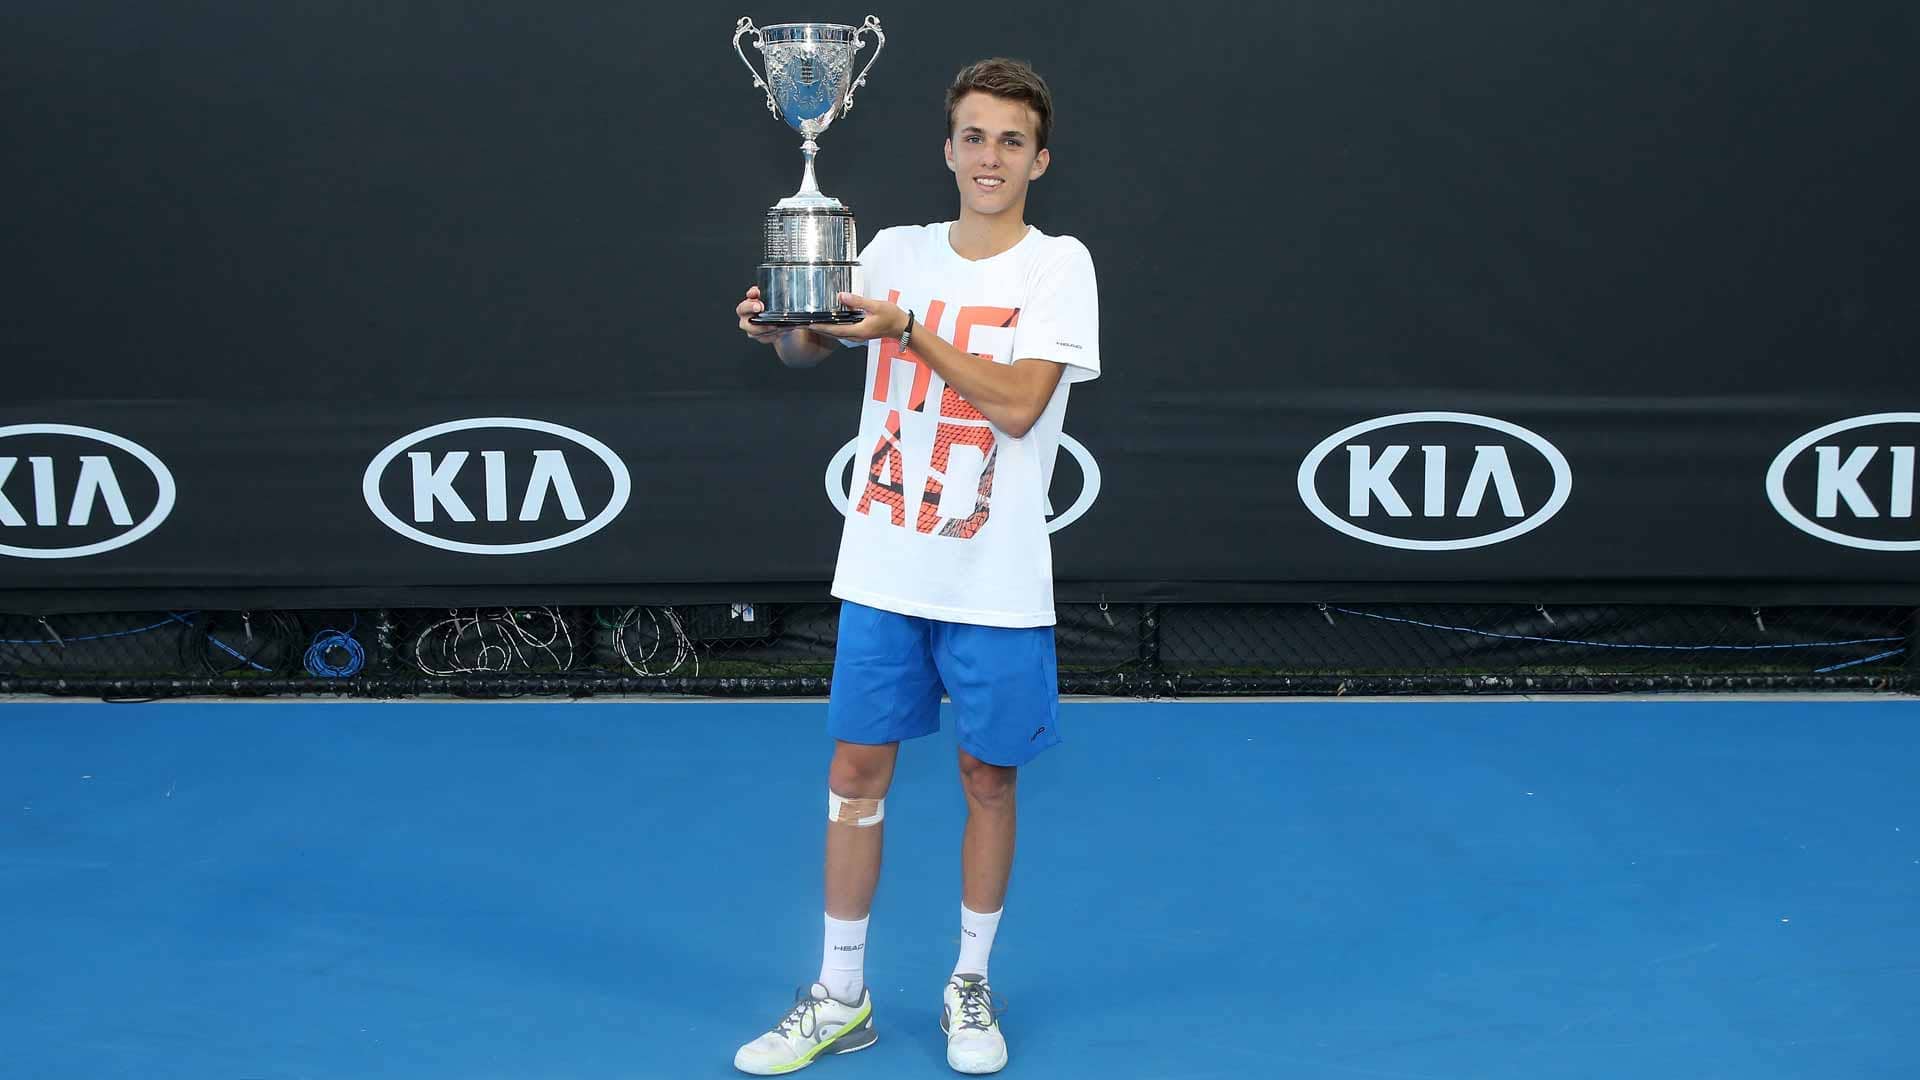 Zsombor Piros earns the 2017 Australian Open boys' singles crown.